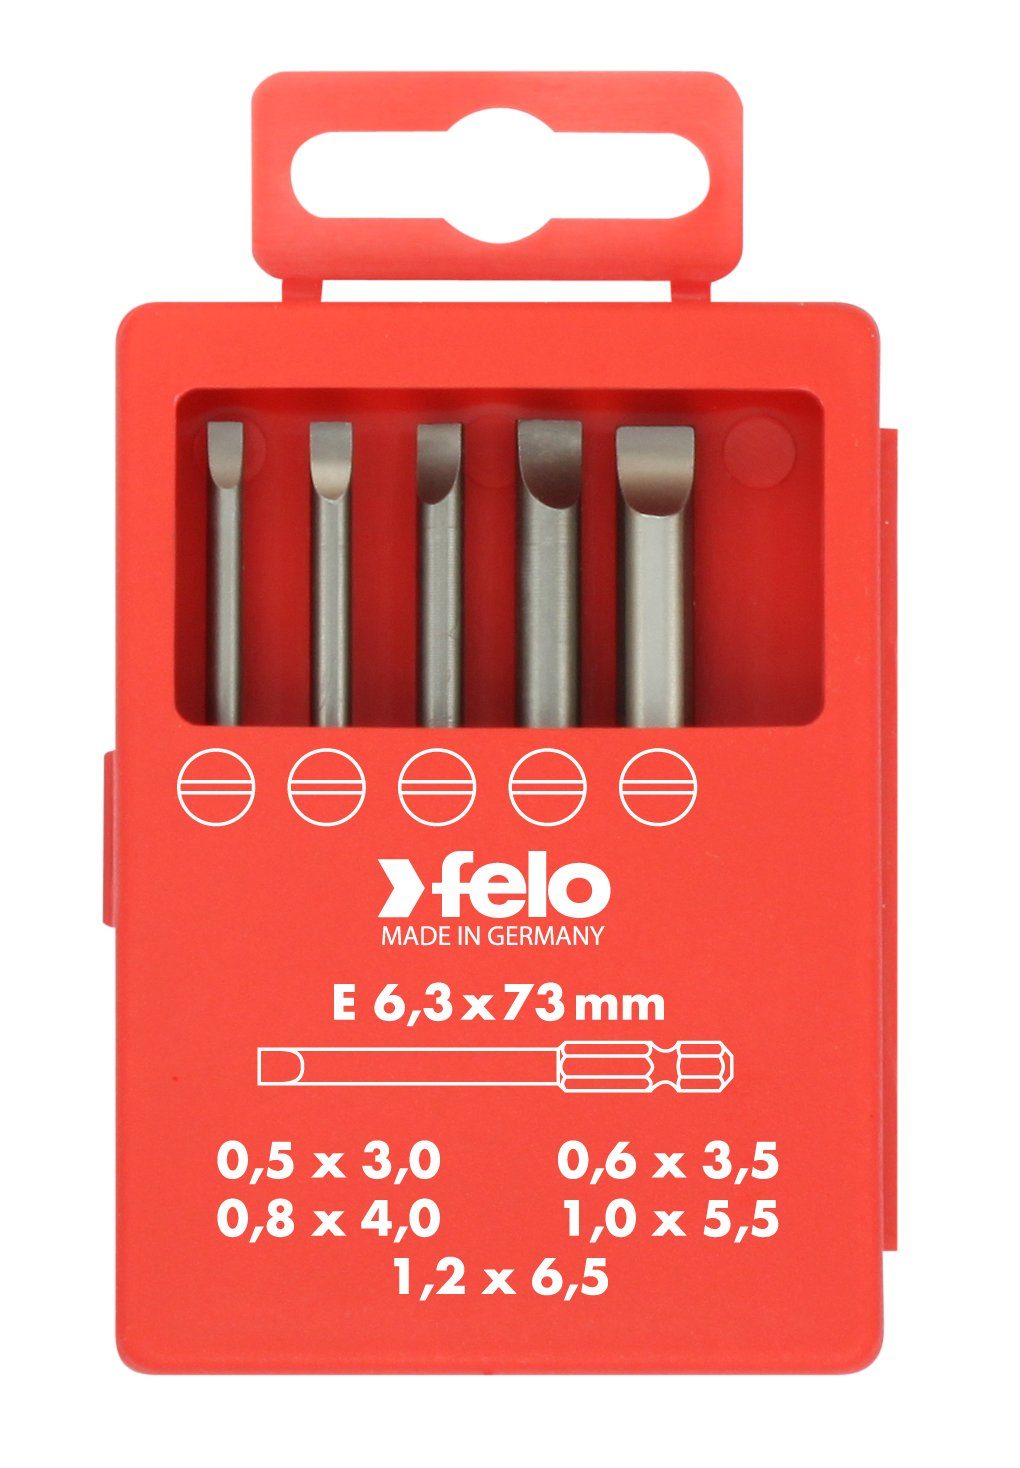 Felo Bit-Set Felo Profi Bitbox 73 mm, je 1 Bit 0,5 x 3,0, 0,6 x 3,5, 0,8 x 4,0, 1,0 x 5,5, 1,2 x 6,5